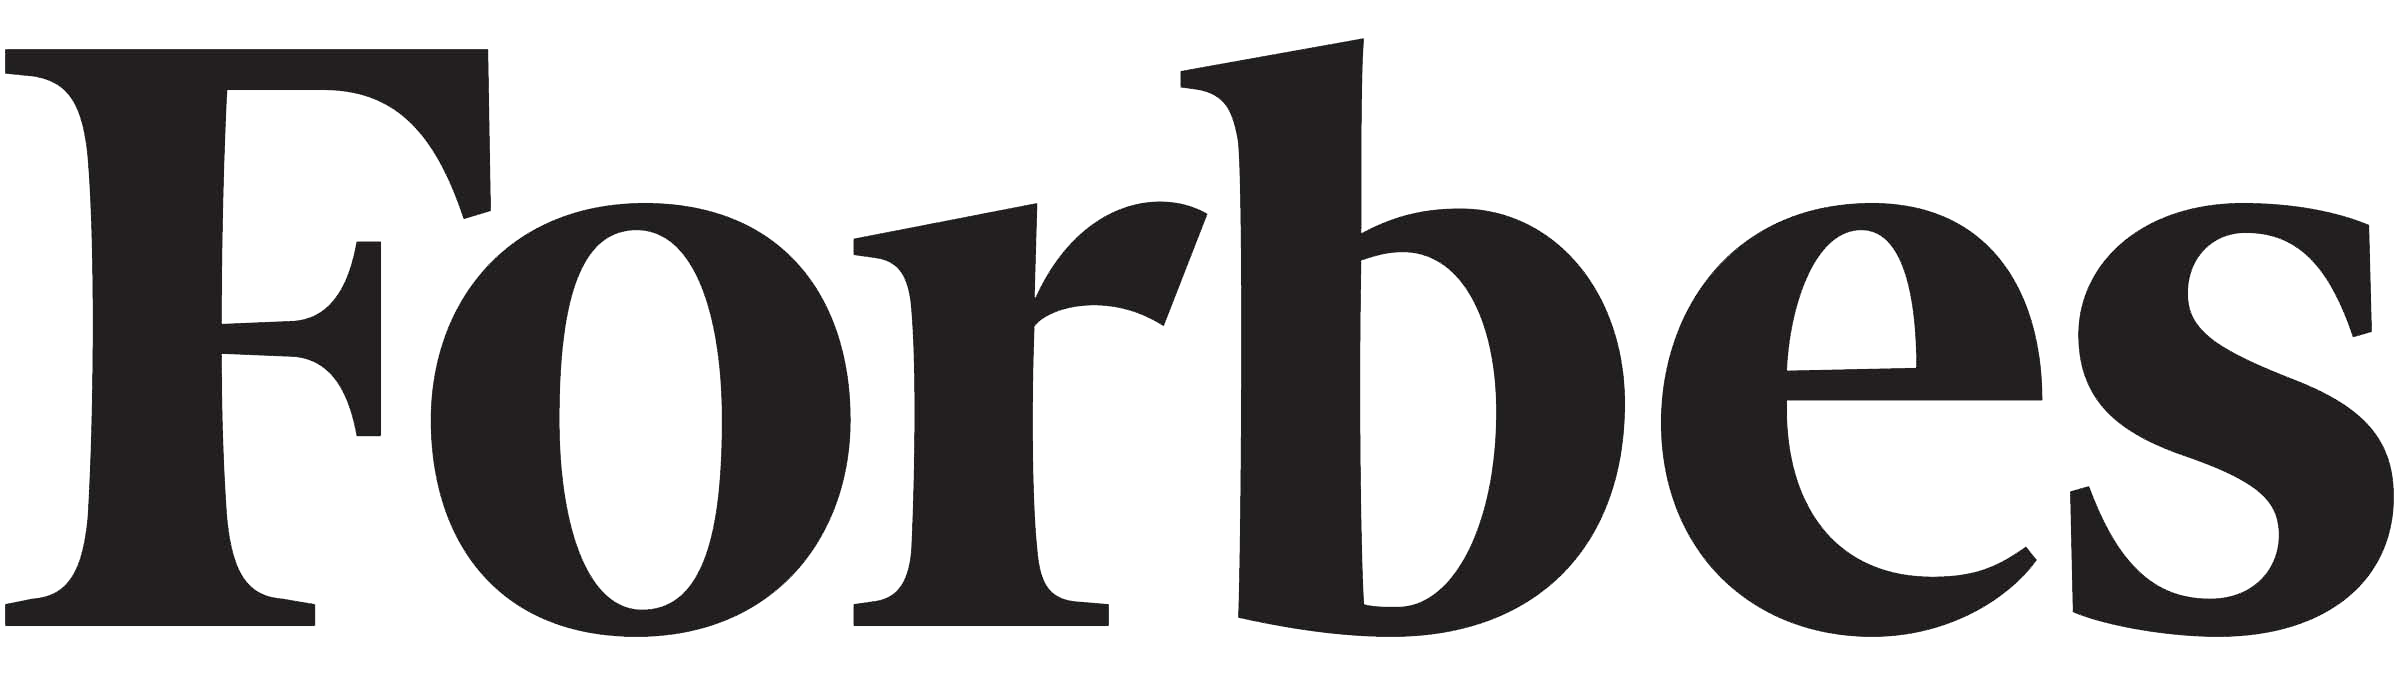 Media logo forbes-logo.png